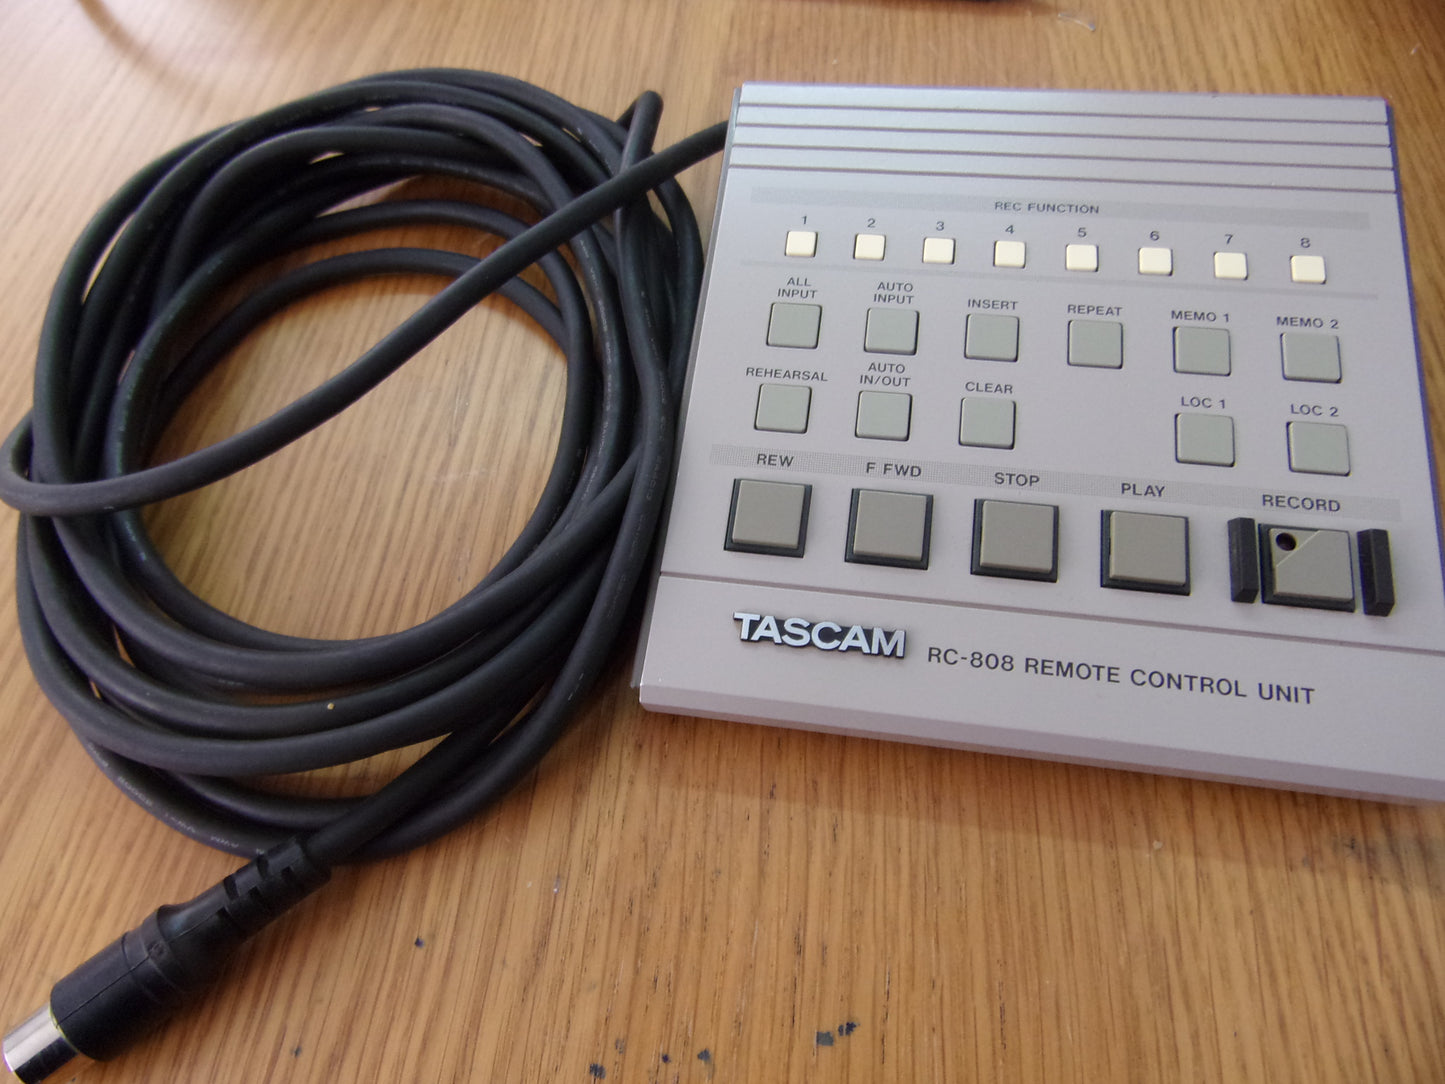 Tascam RC-808 remote control unit